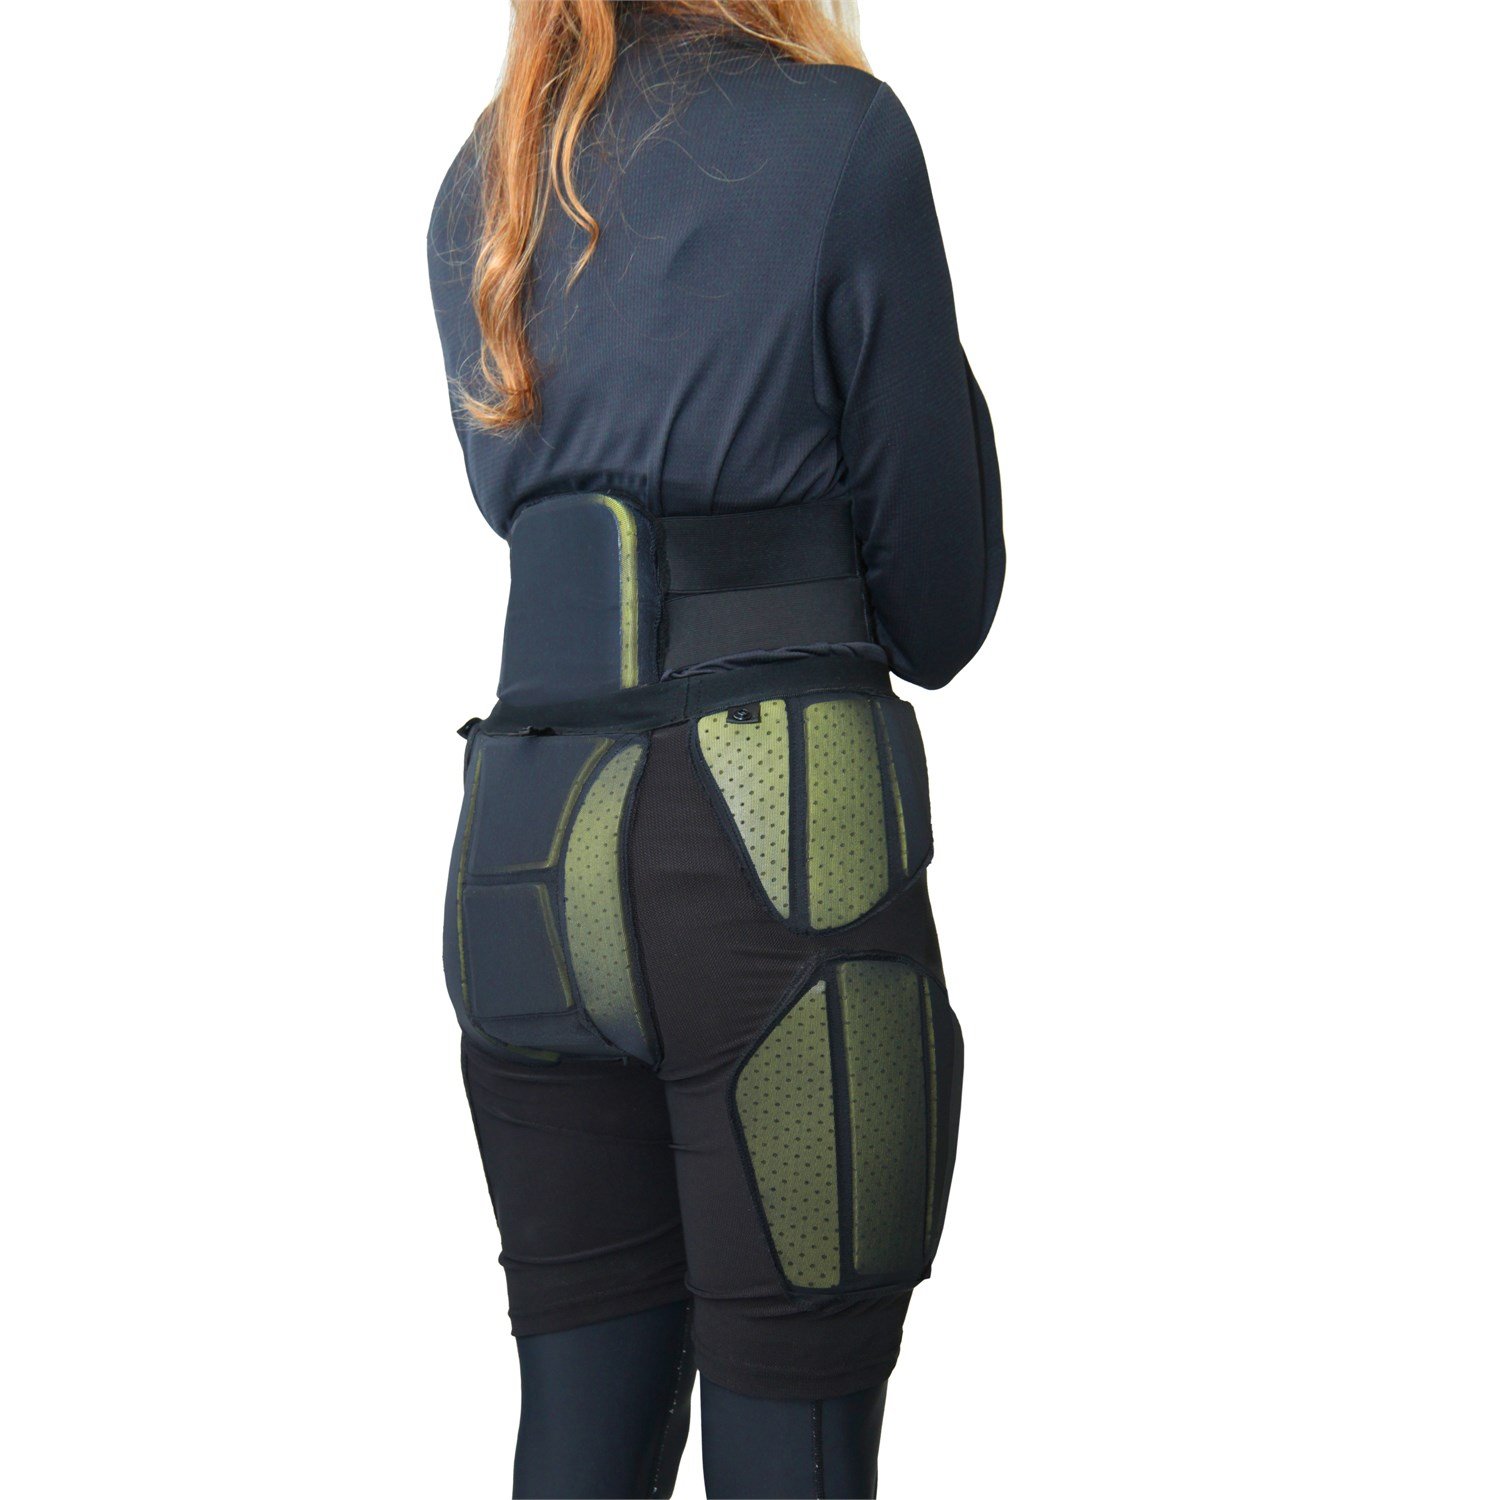 https://images.evo.com/imgp/zoom/72127/339294/bern-low-pro-hip-tailbone-protector-body-armor-women-s-.jpg